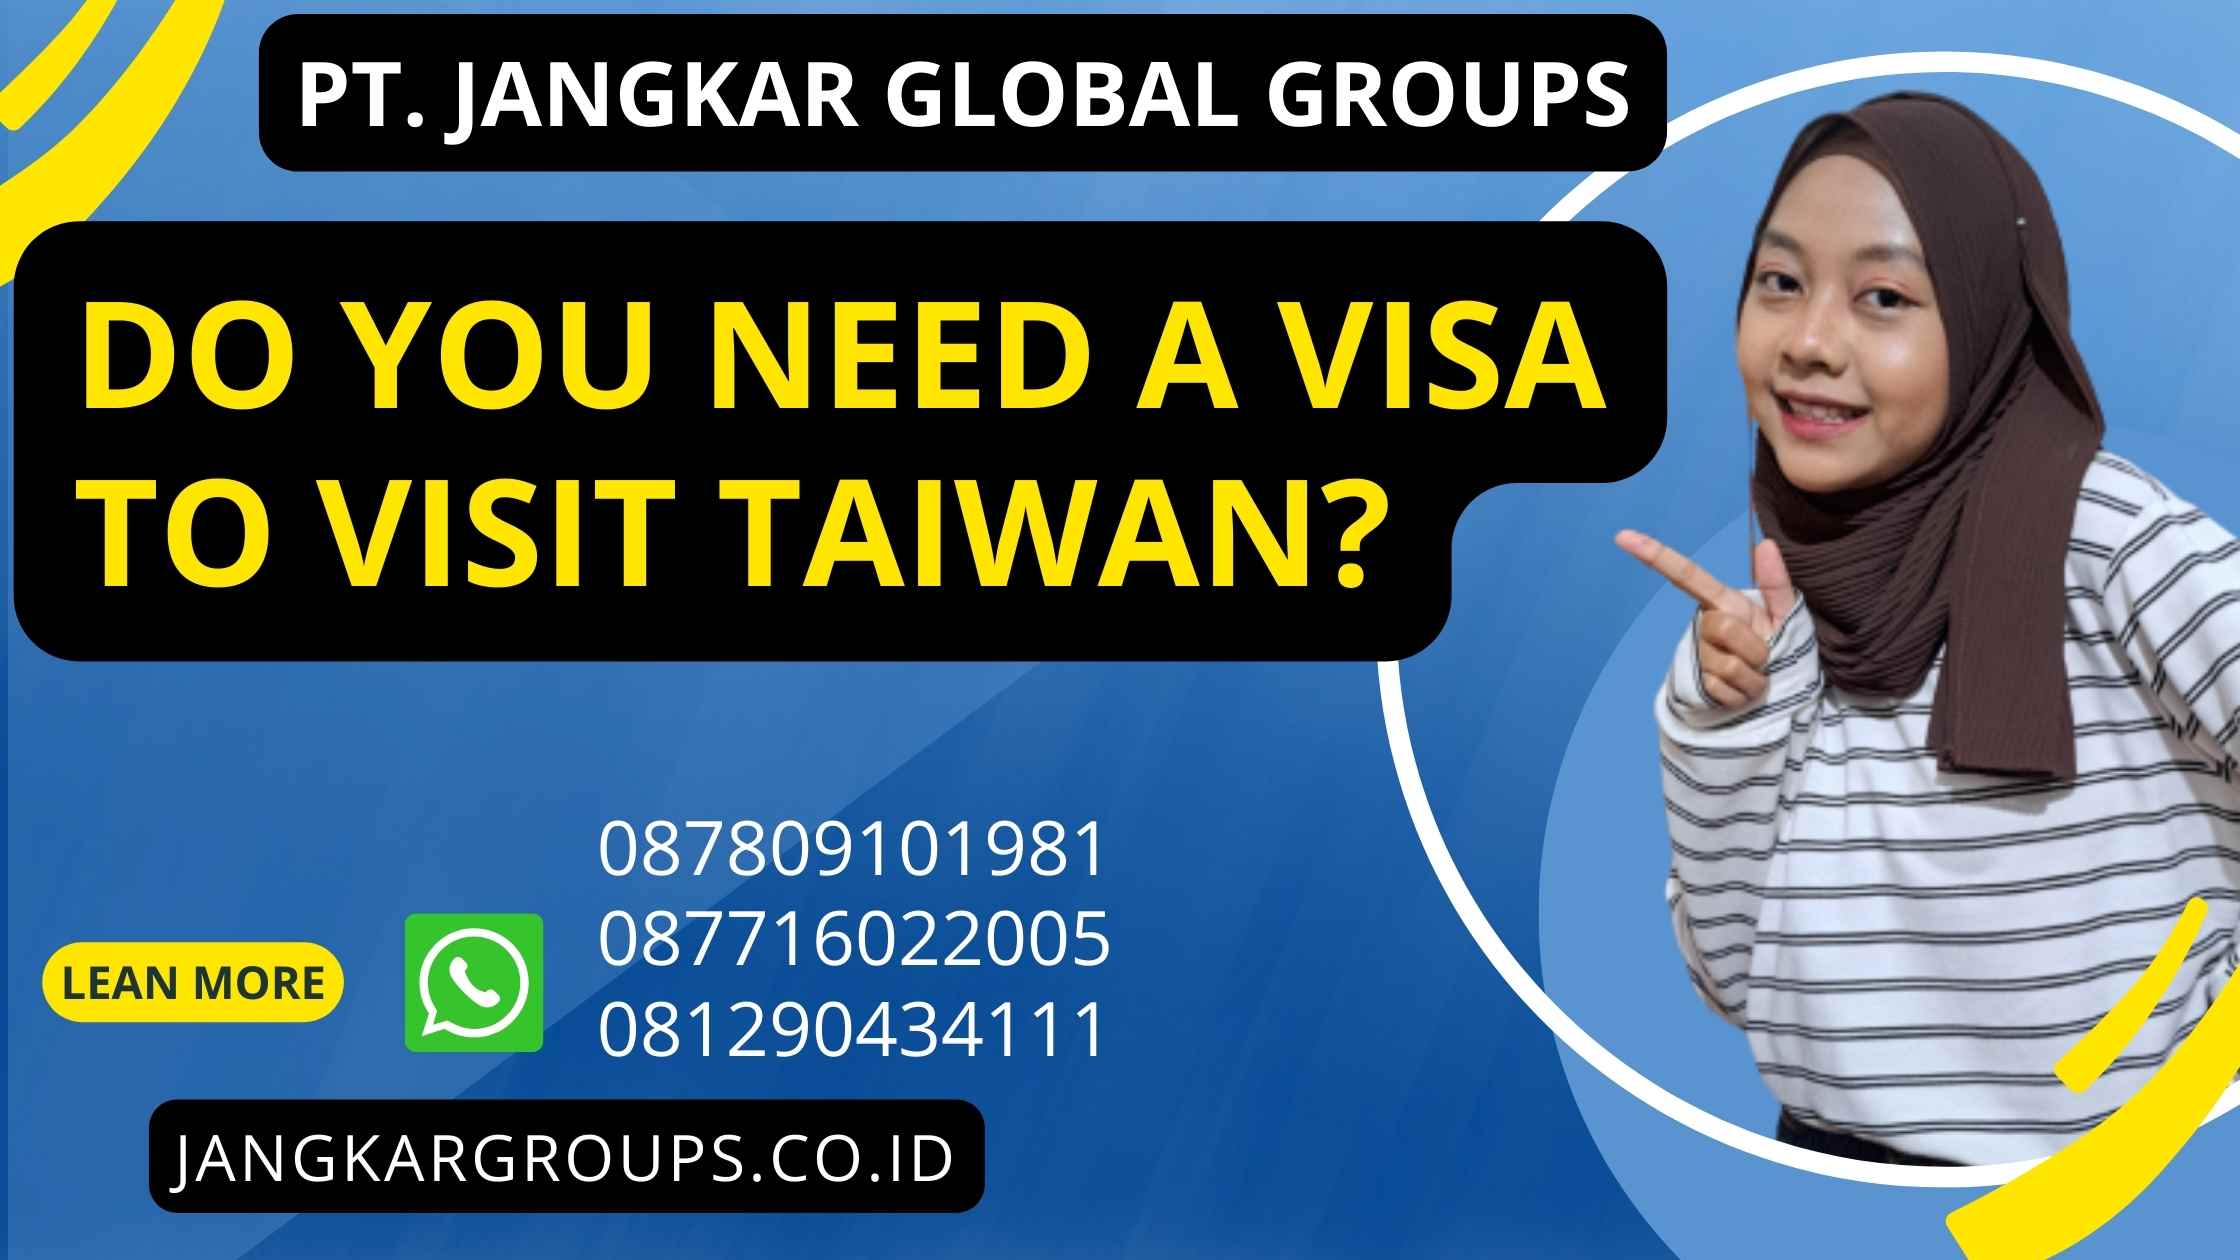 Do You Need a Visa to Visit Taiwan?